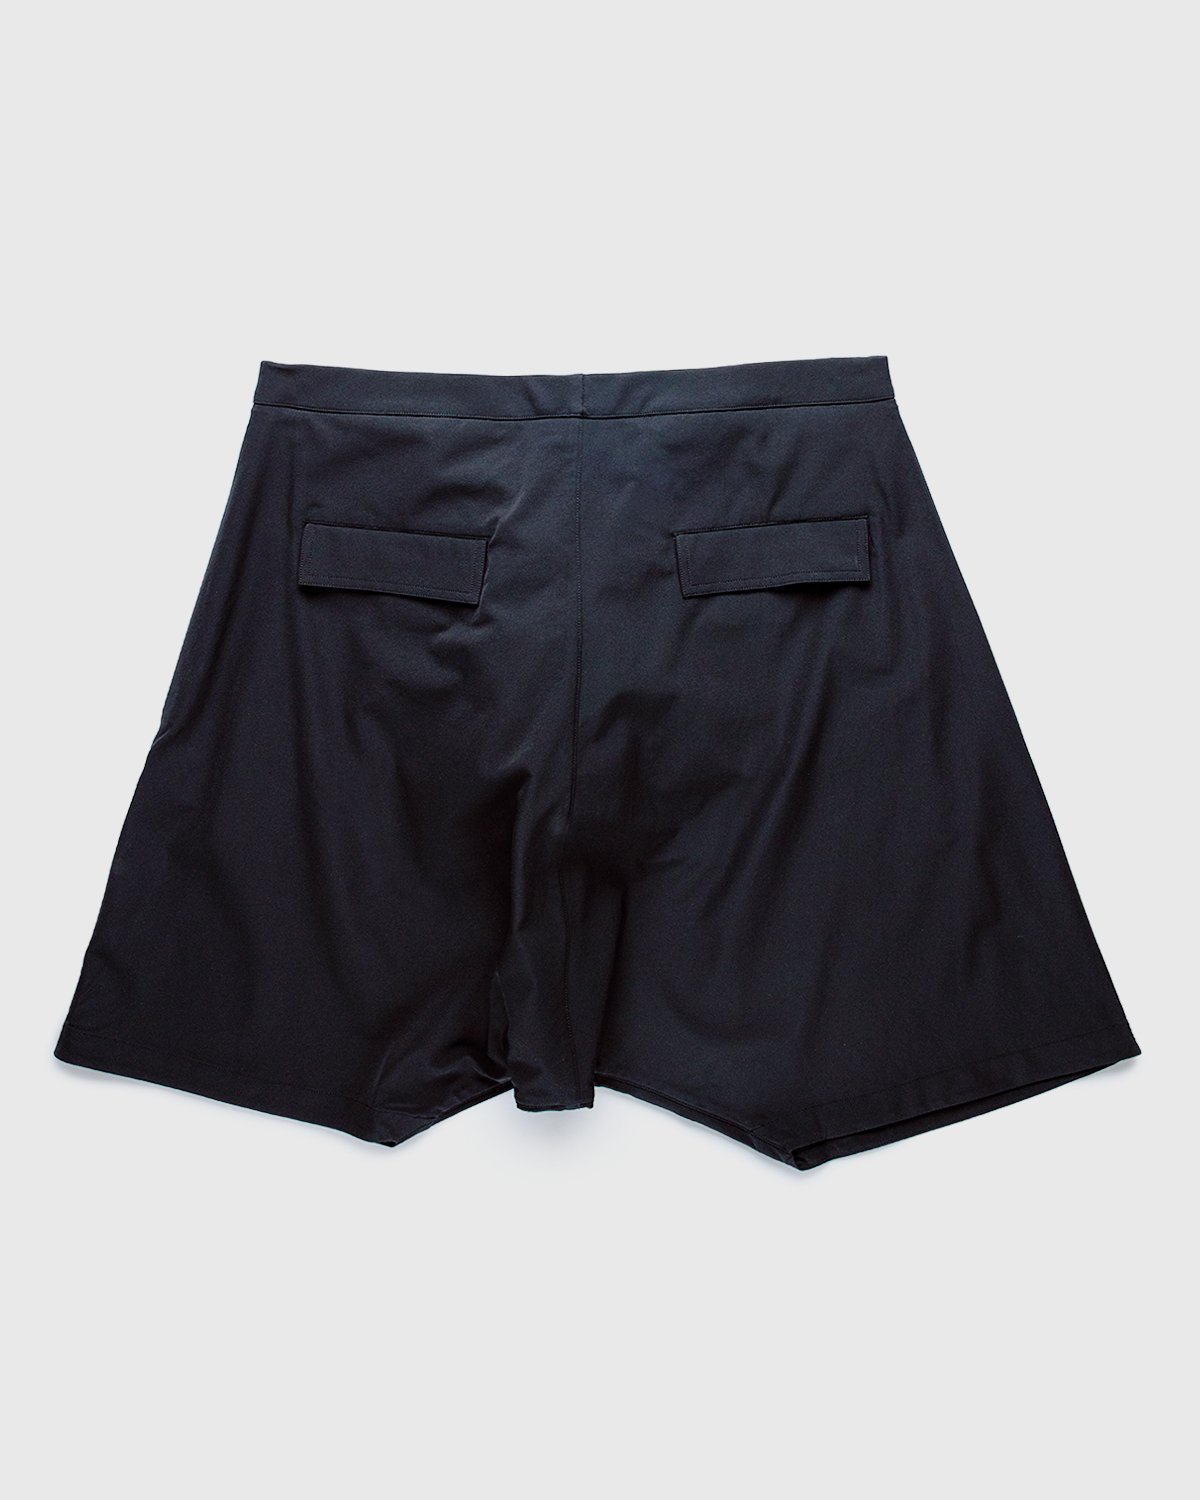 ACRONYM - SP28-DS Pants Black - Clothing - Black - Image 2